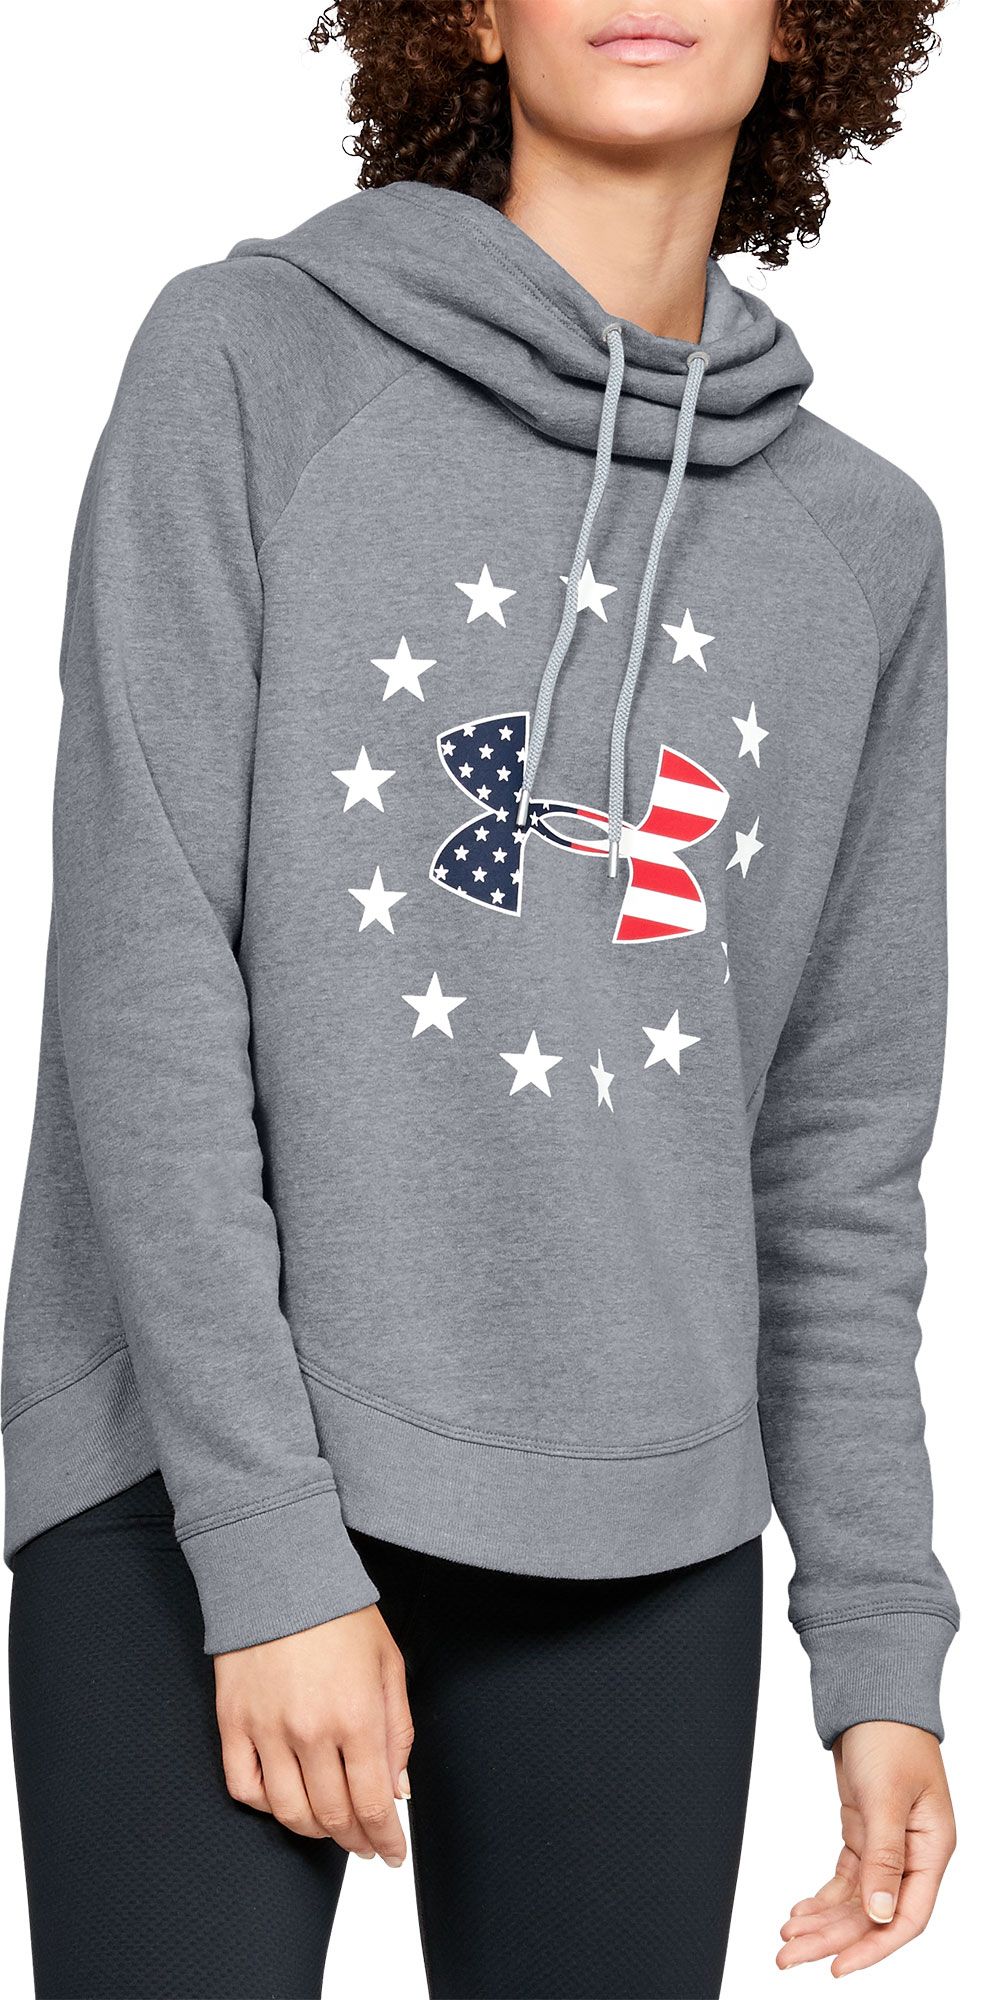 under armour american flag sweatshirt